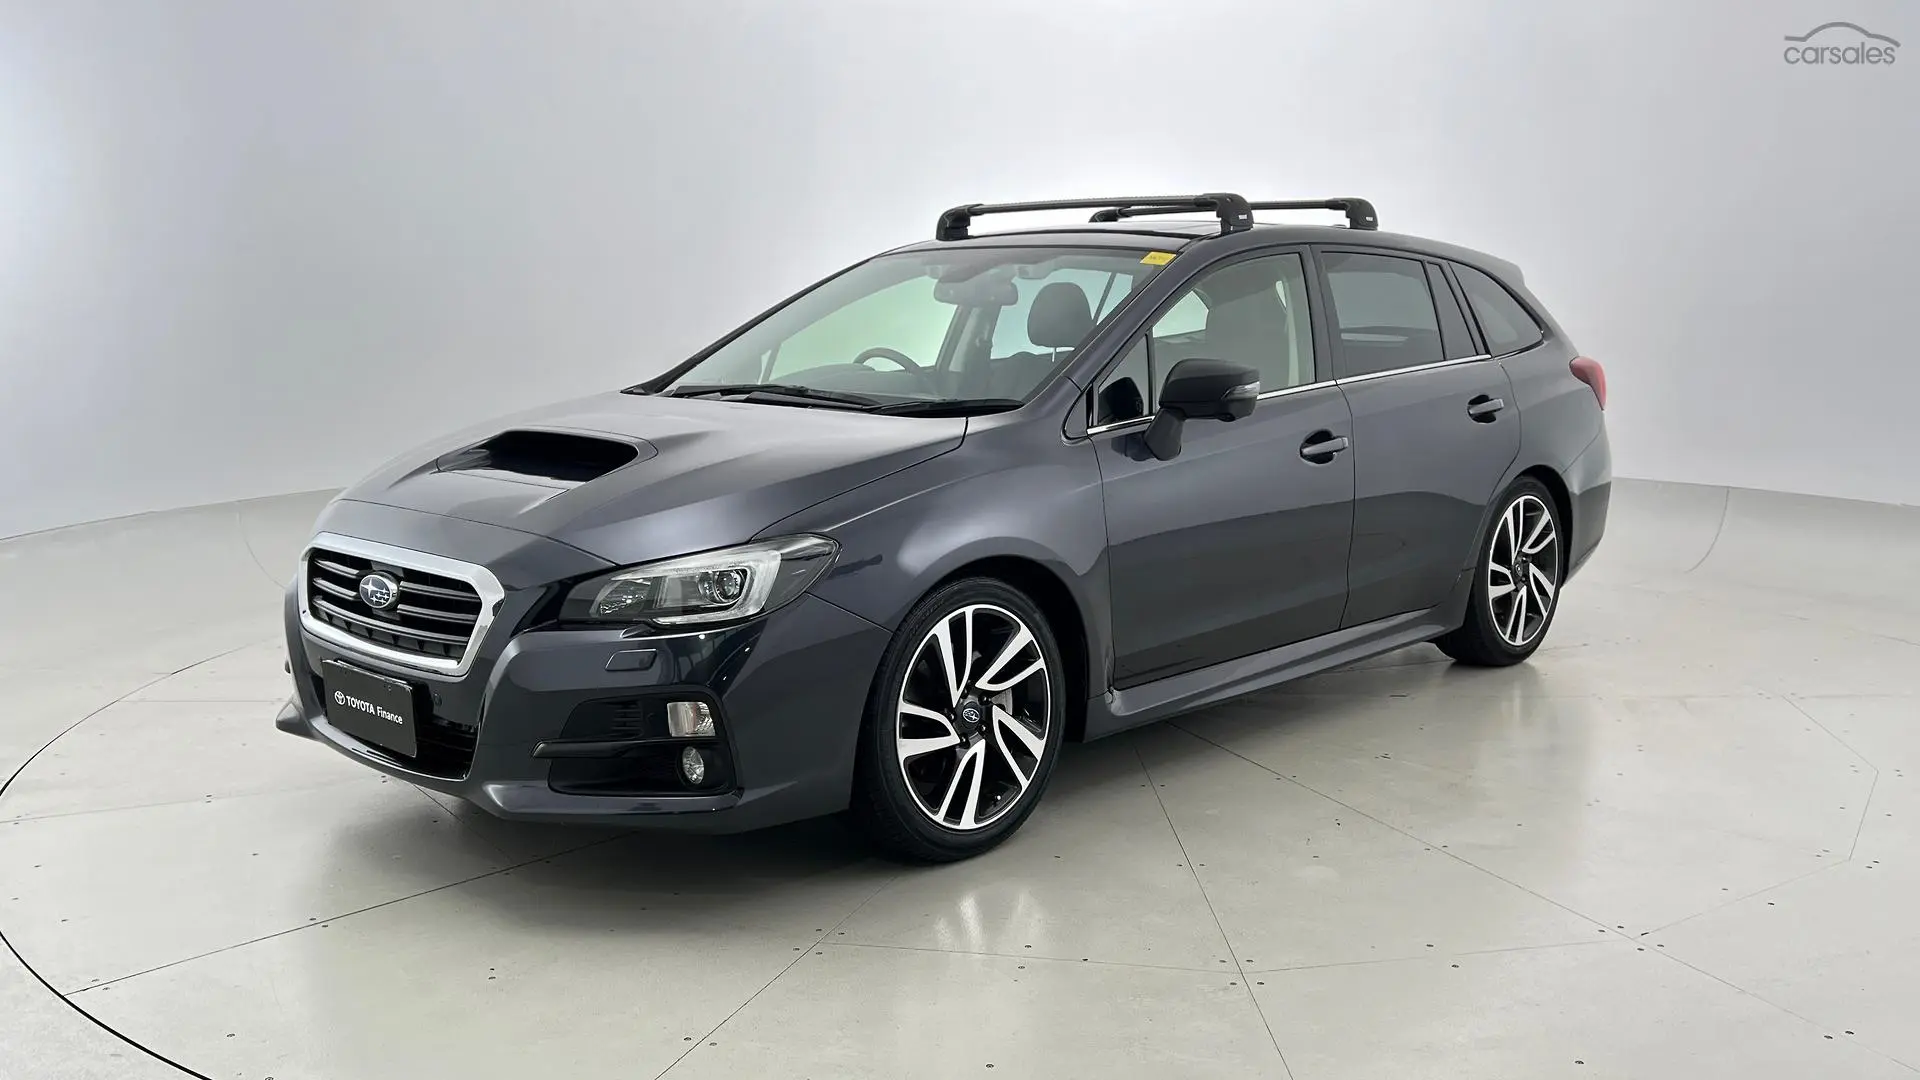 2017 Subaru Levorg Image 9